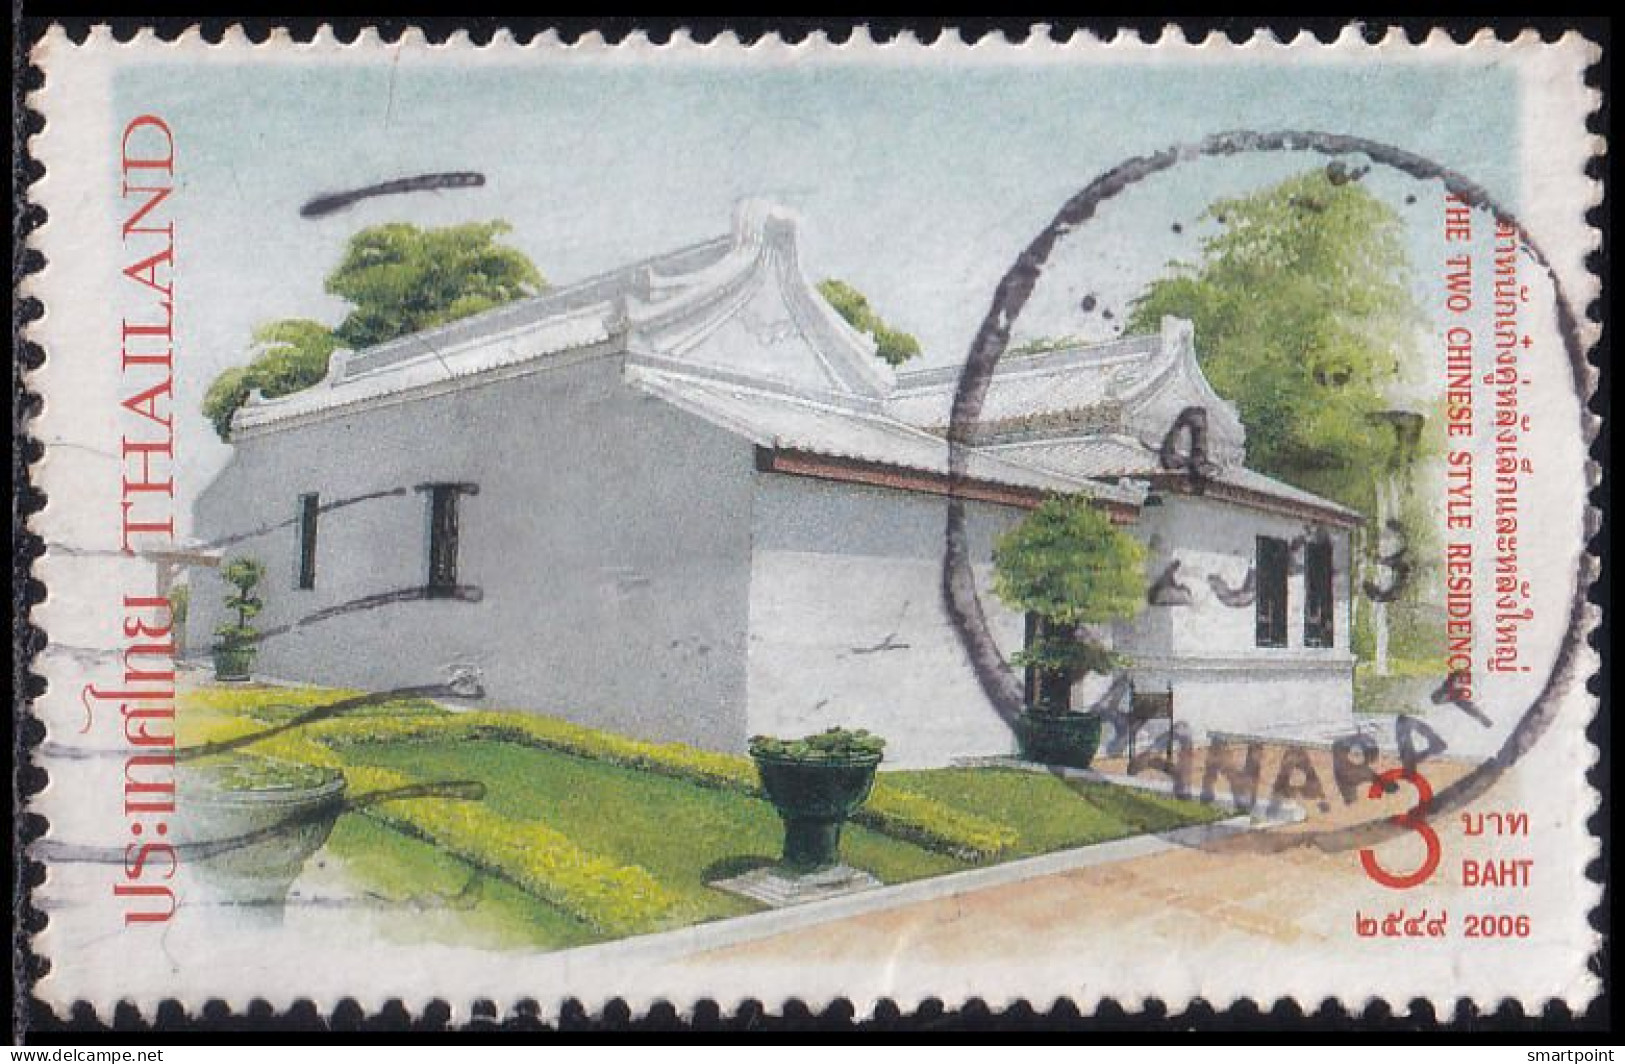 Thailand Stamp 2006 Phra Racha Wang Derm (Thonburi Palace) 3 Baht - Used - Thailand